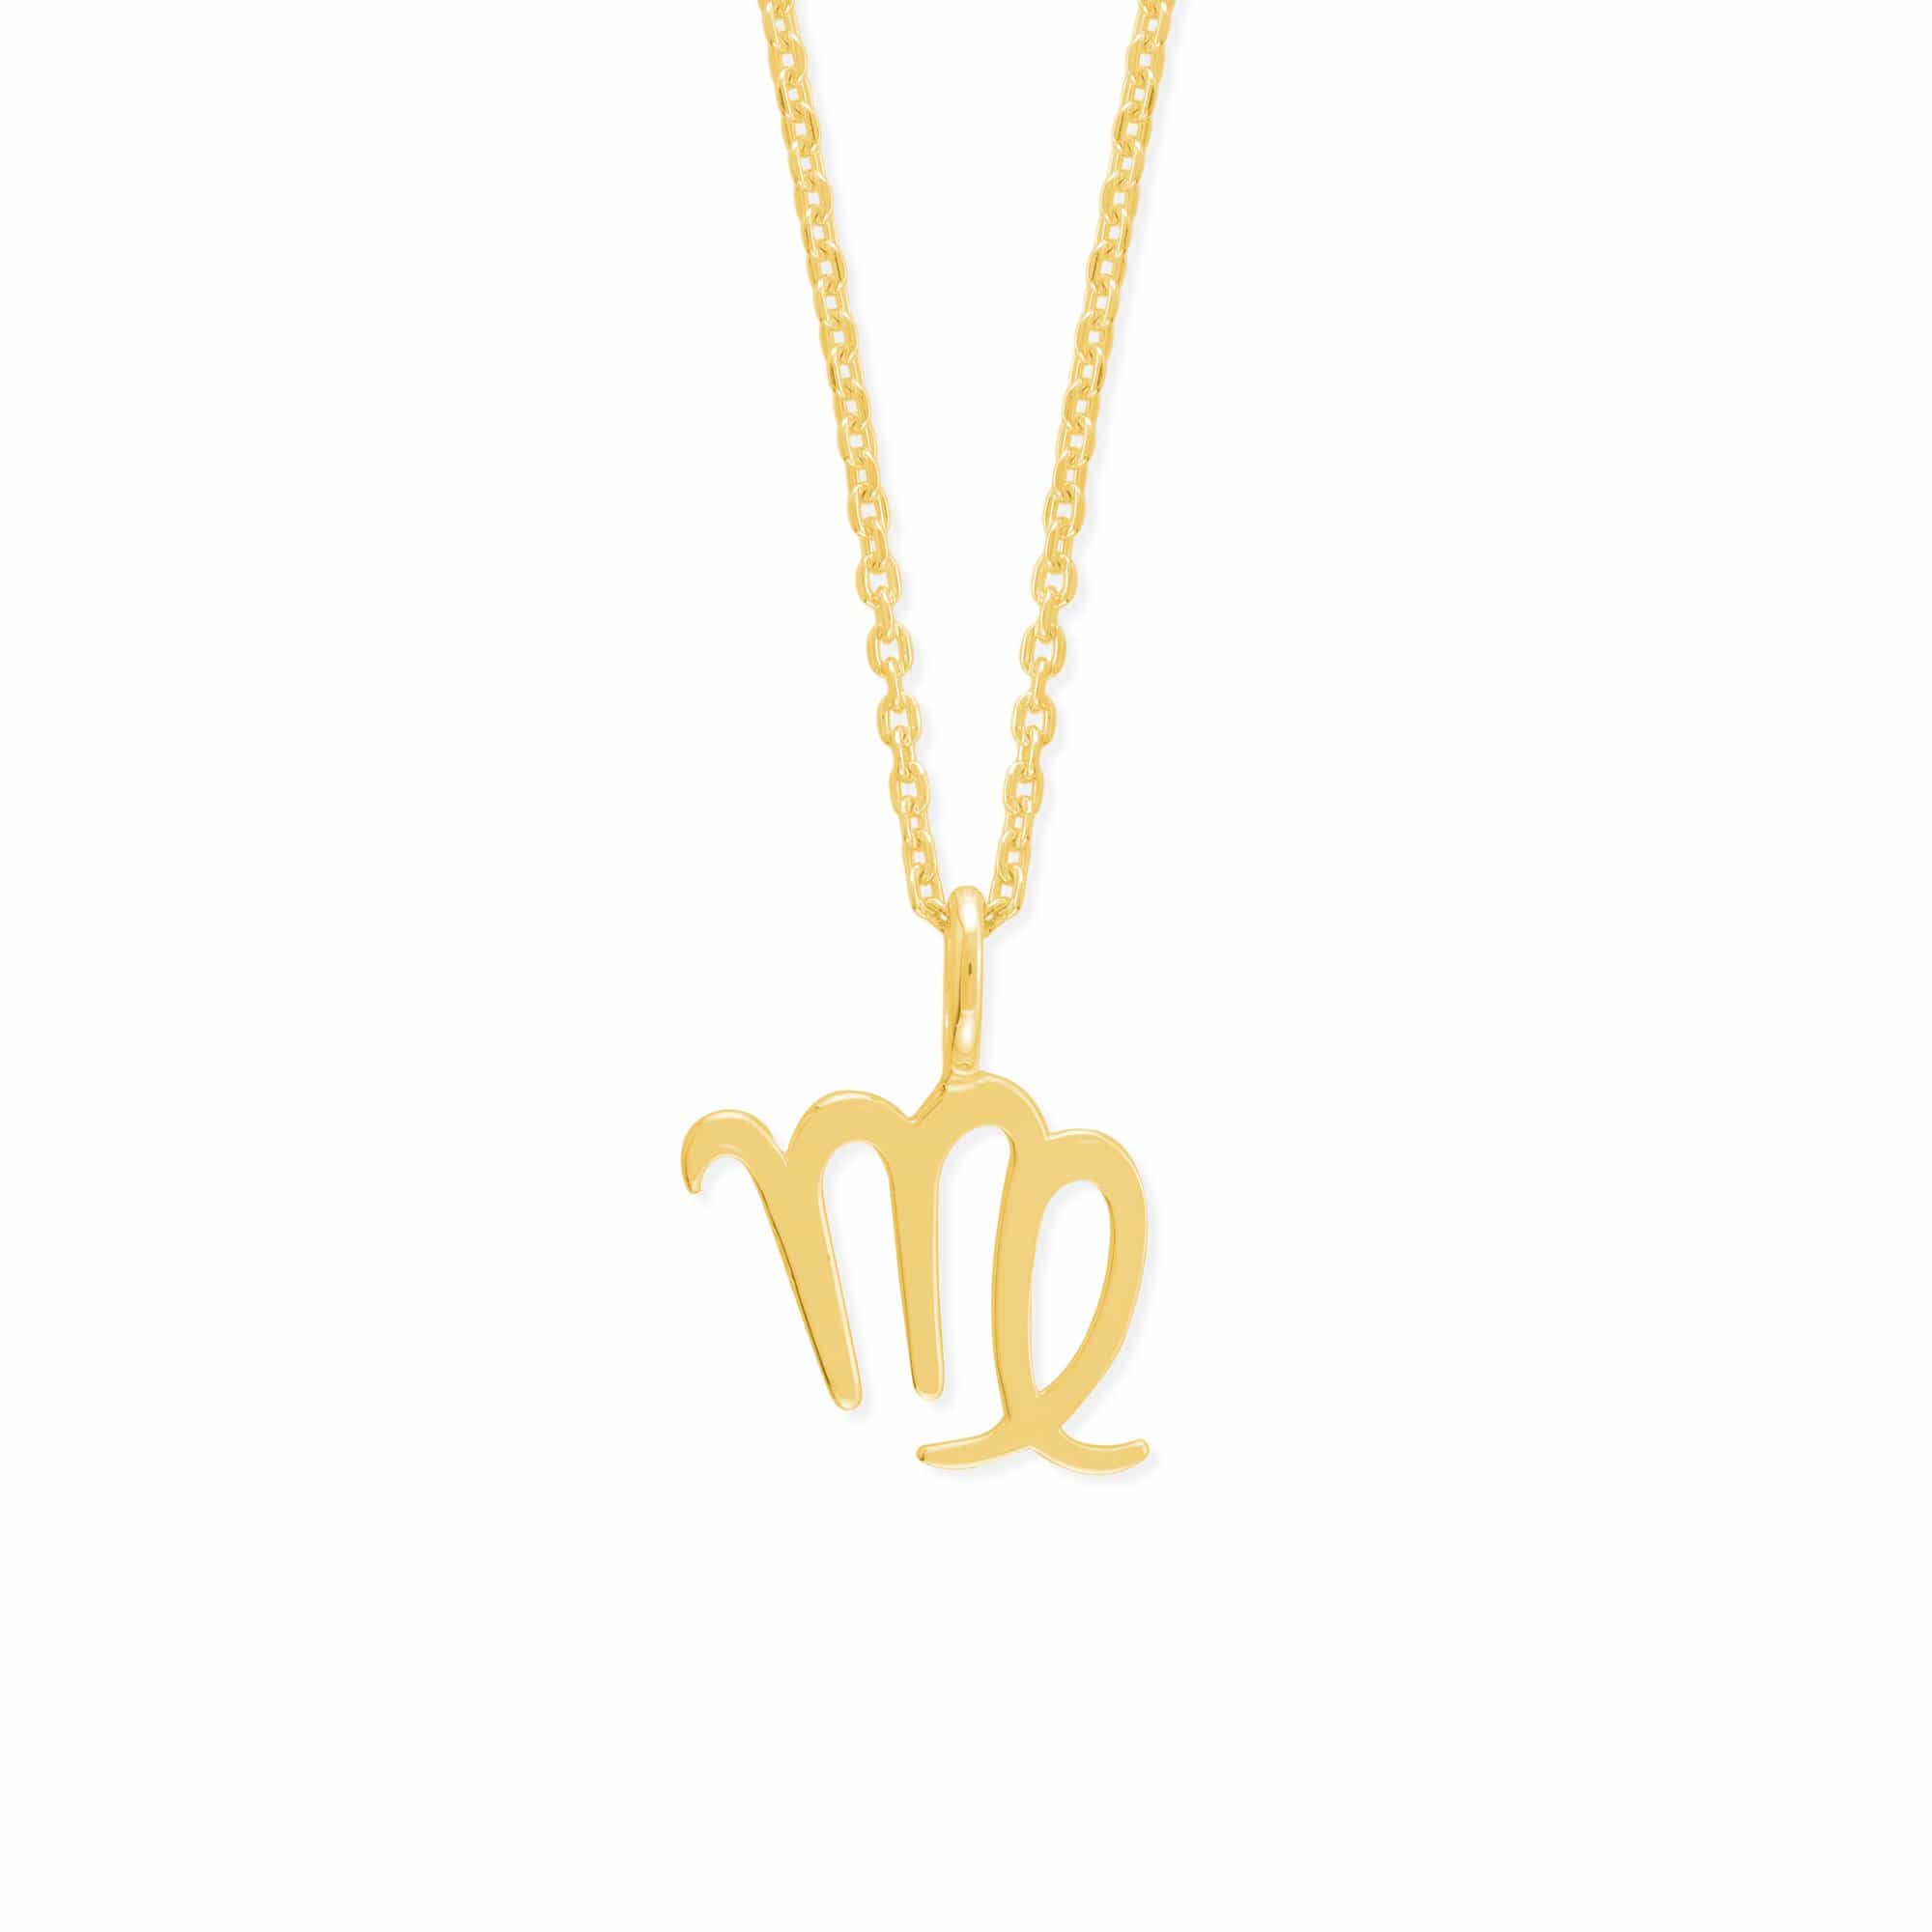 Boma Jewelry Necklaces 14K Gold Plated / Virgo Zodiac Necklace